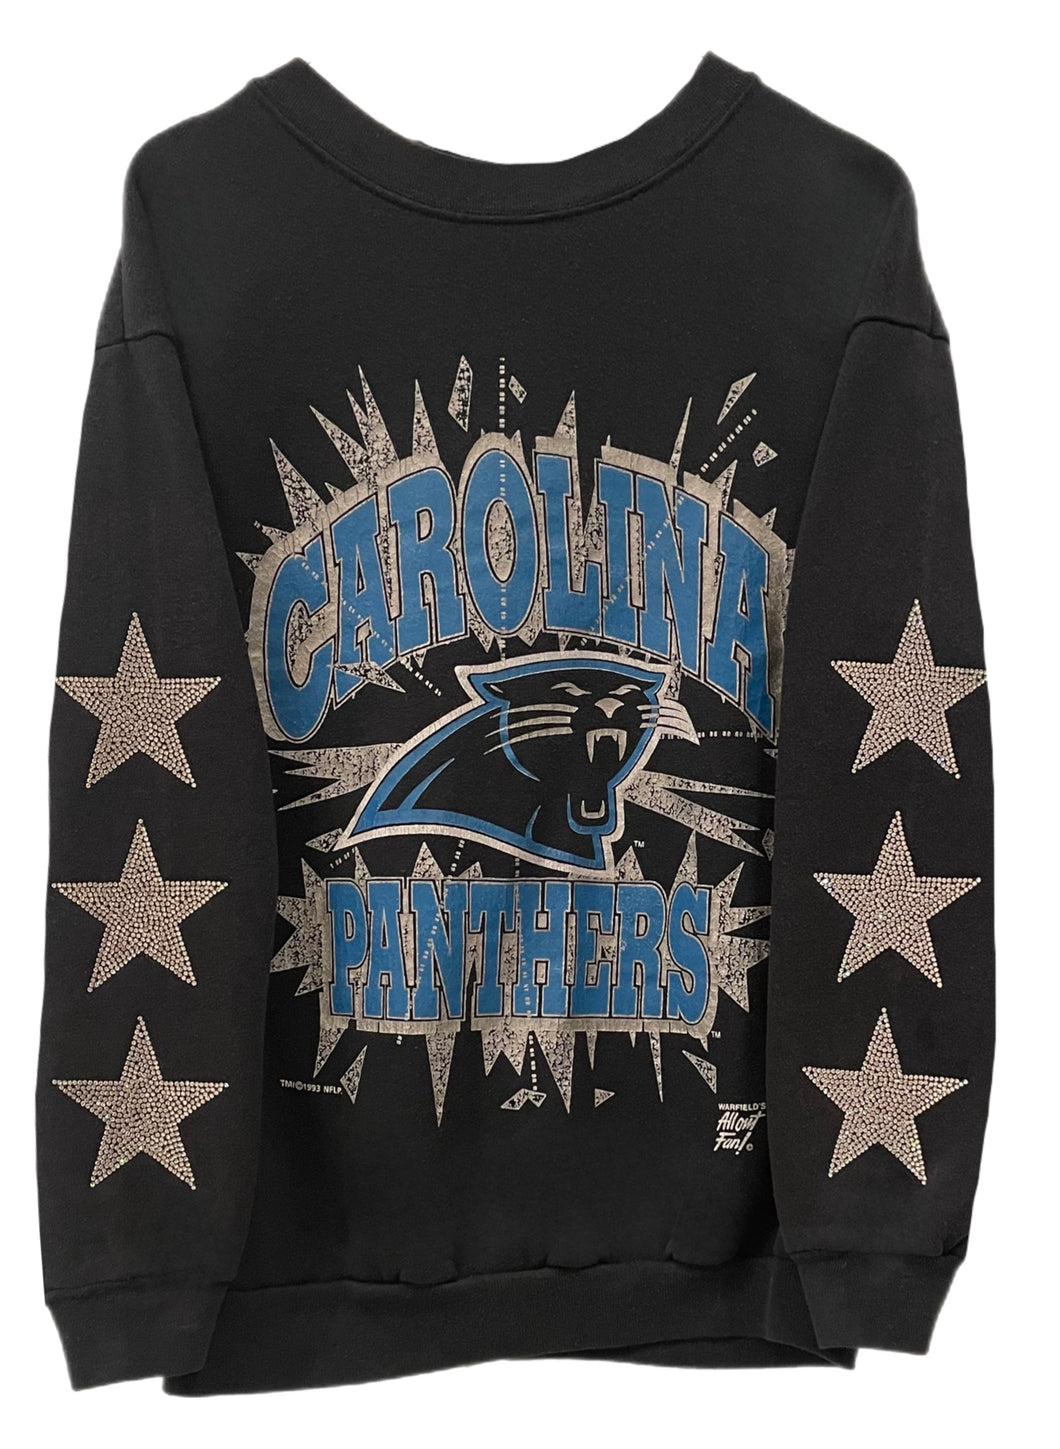 Carolina Panthers, Football One of a KIND Vintage Sweatshirt with Three Crystal Star Design